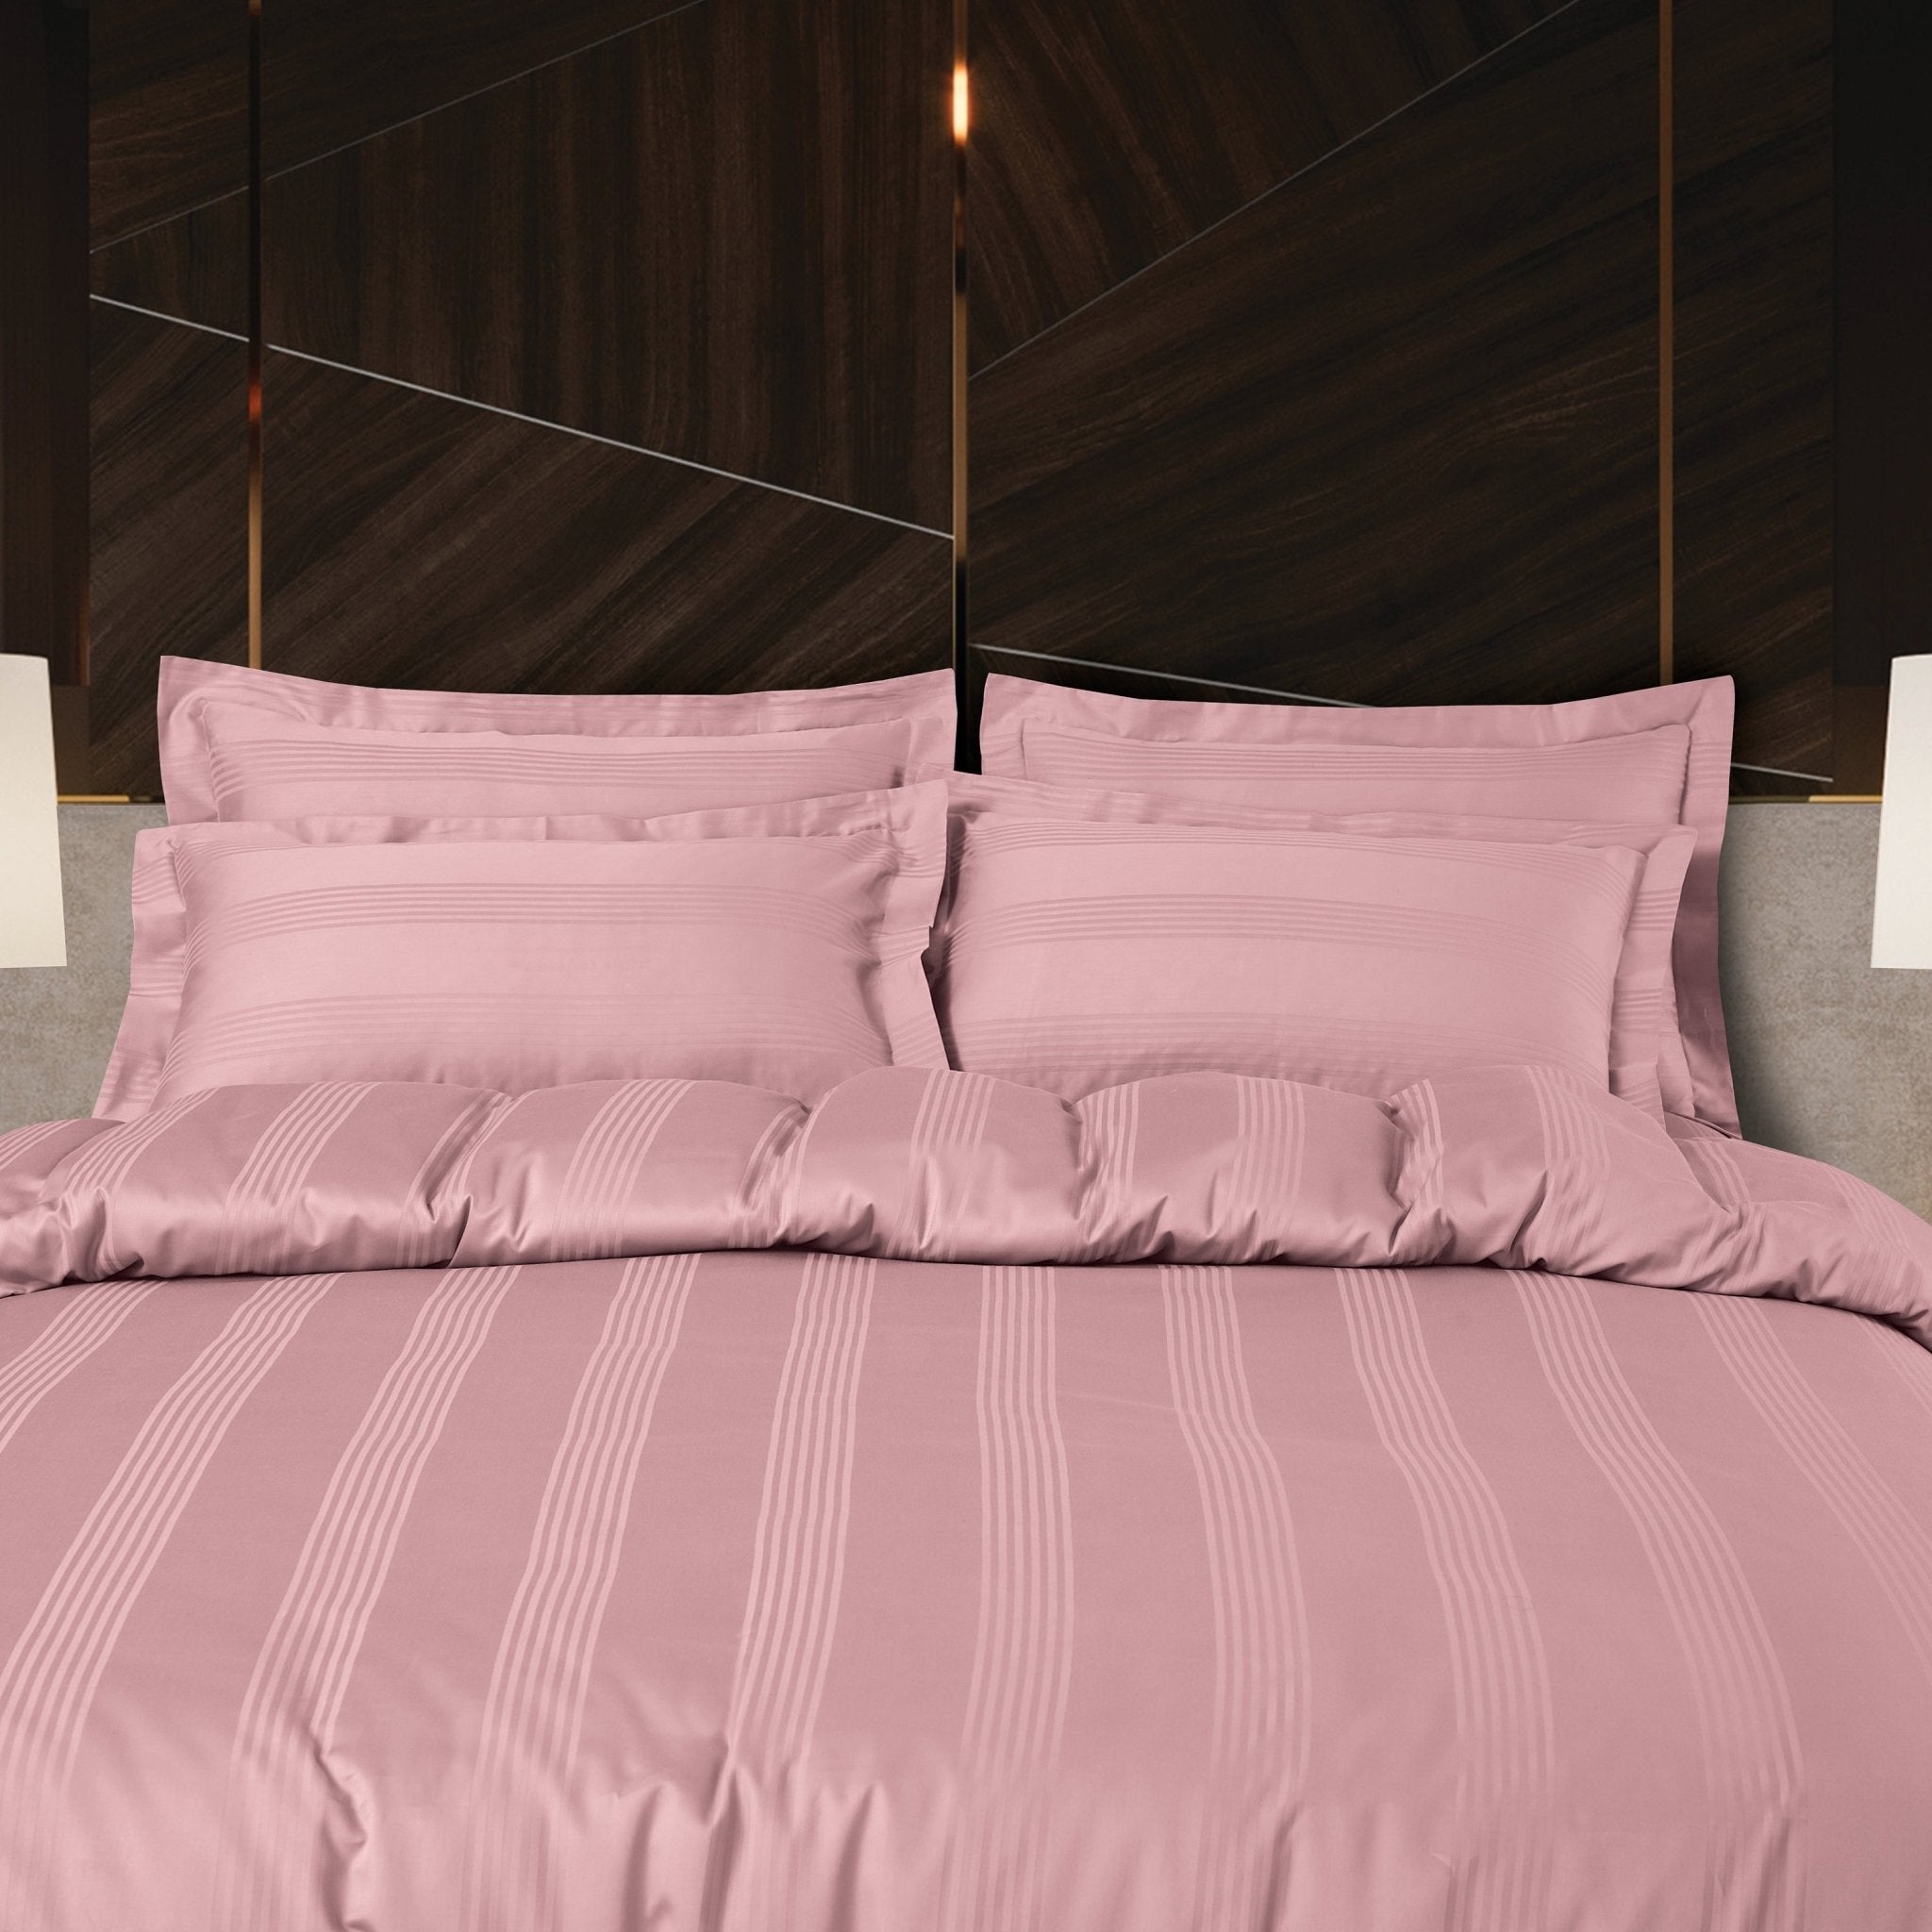 Malako Turin Jacquard Rose Pink Stripes 450 TC 100% Cotton King Size 7 Piece Duvet Cover Set - MALAKO